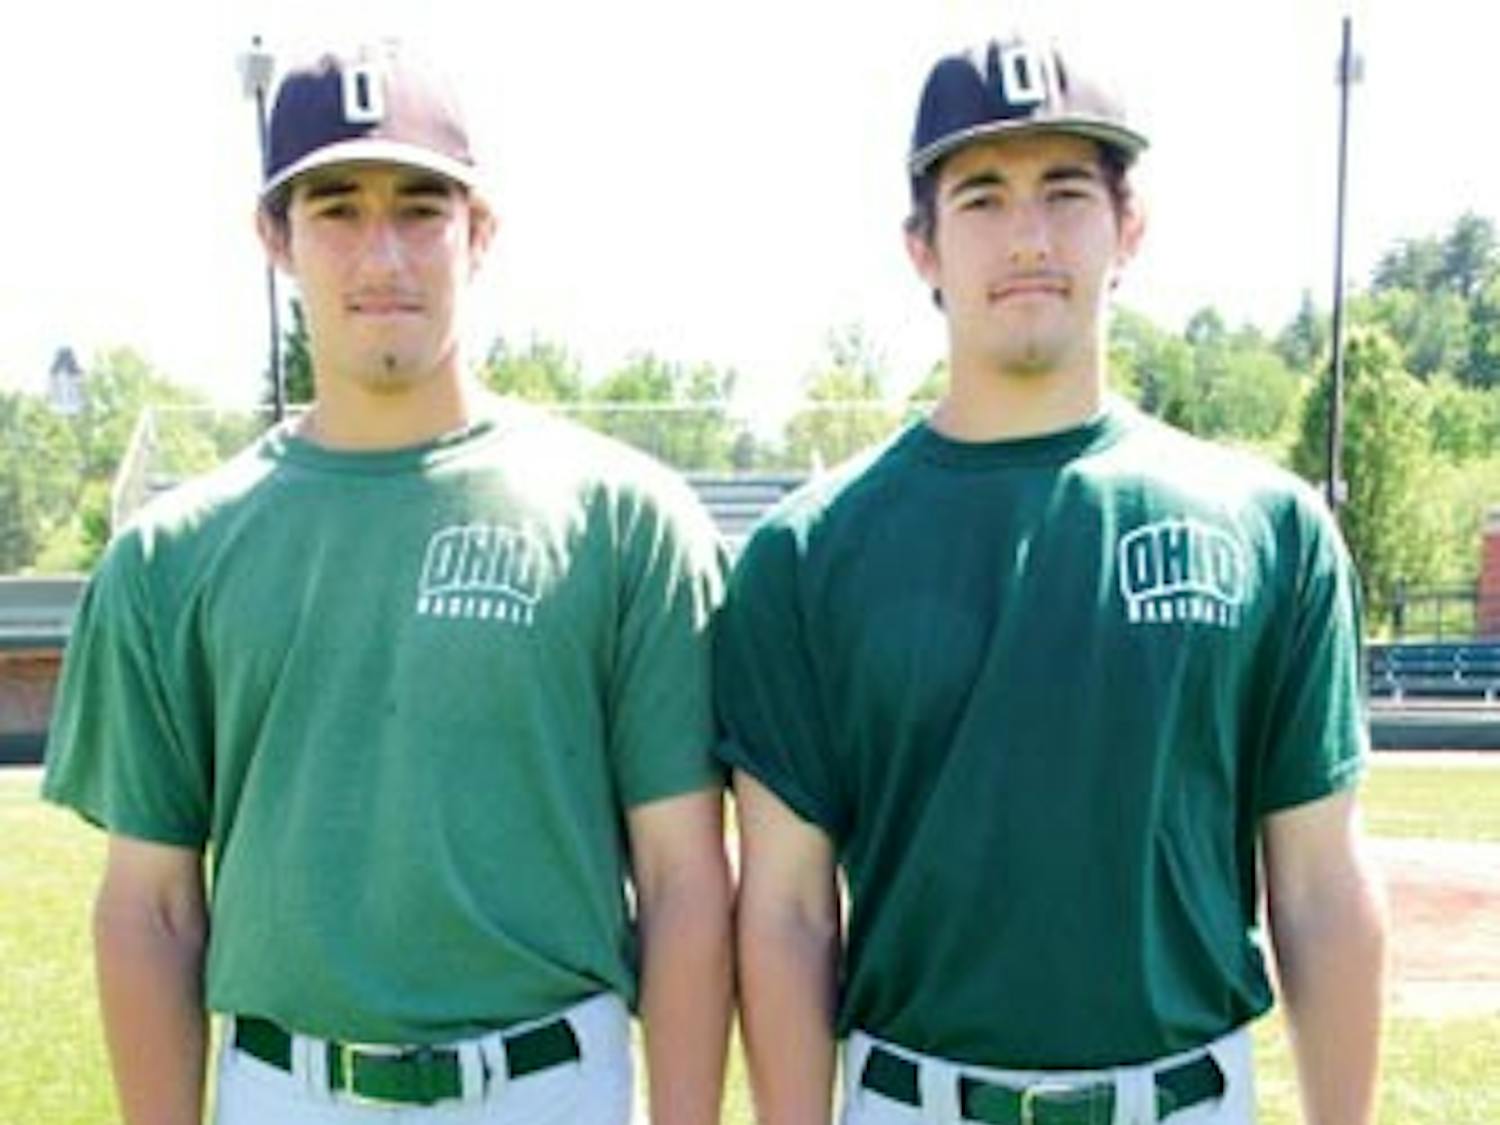 Baseball: Twin pitchers develop two distinct styles  